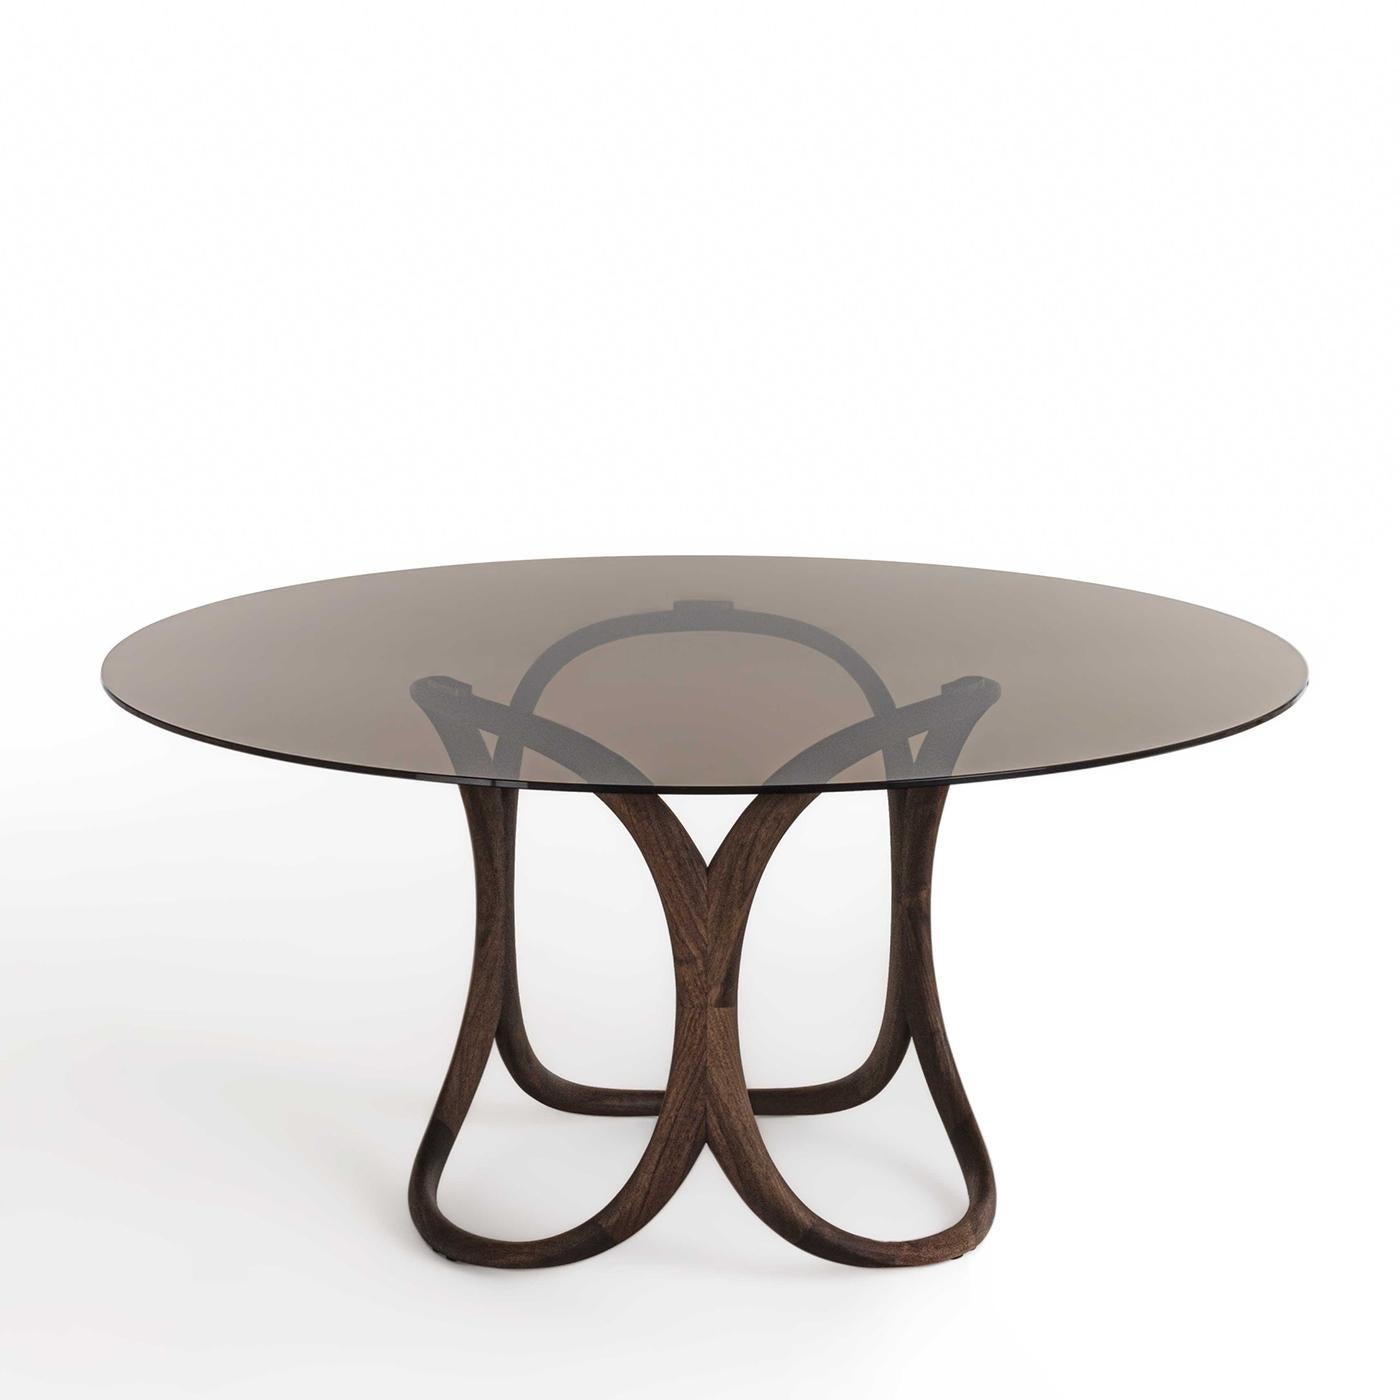 Italian Marlena Table by Studio Nove.3 For Sale